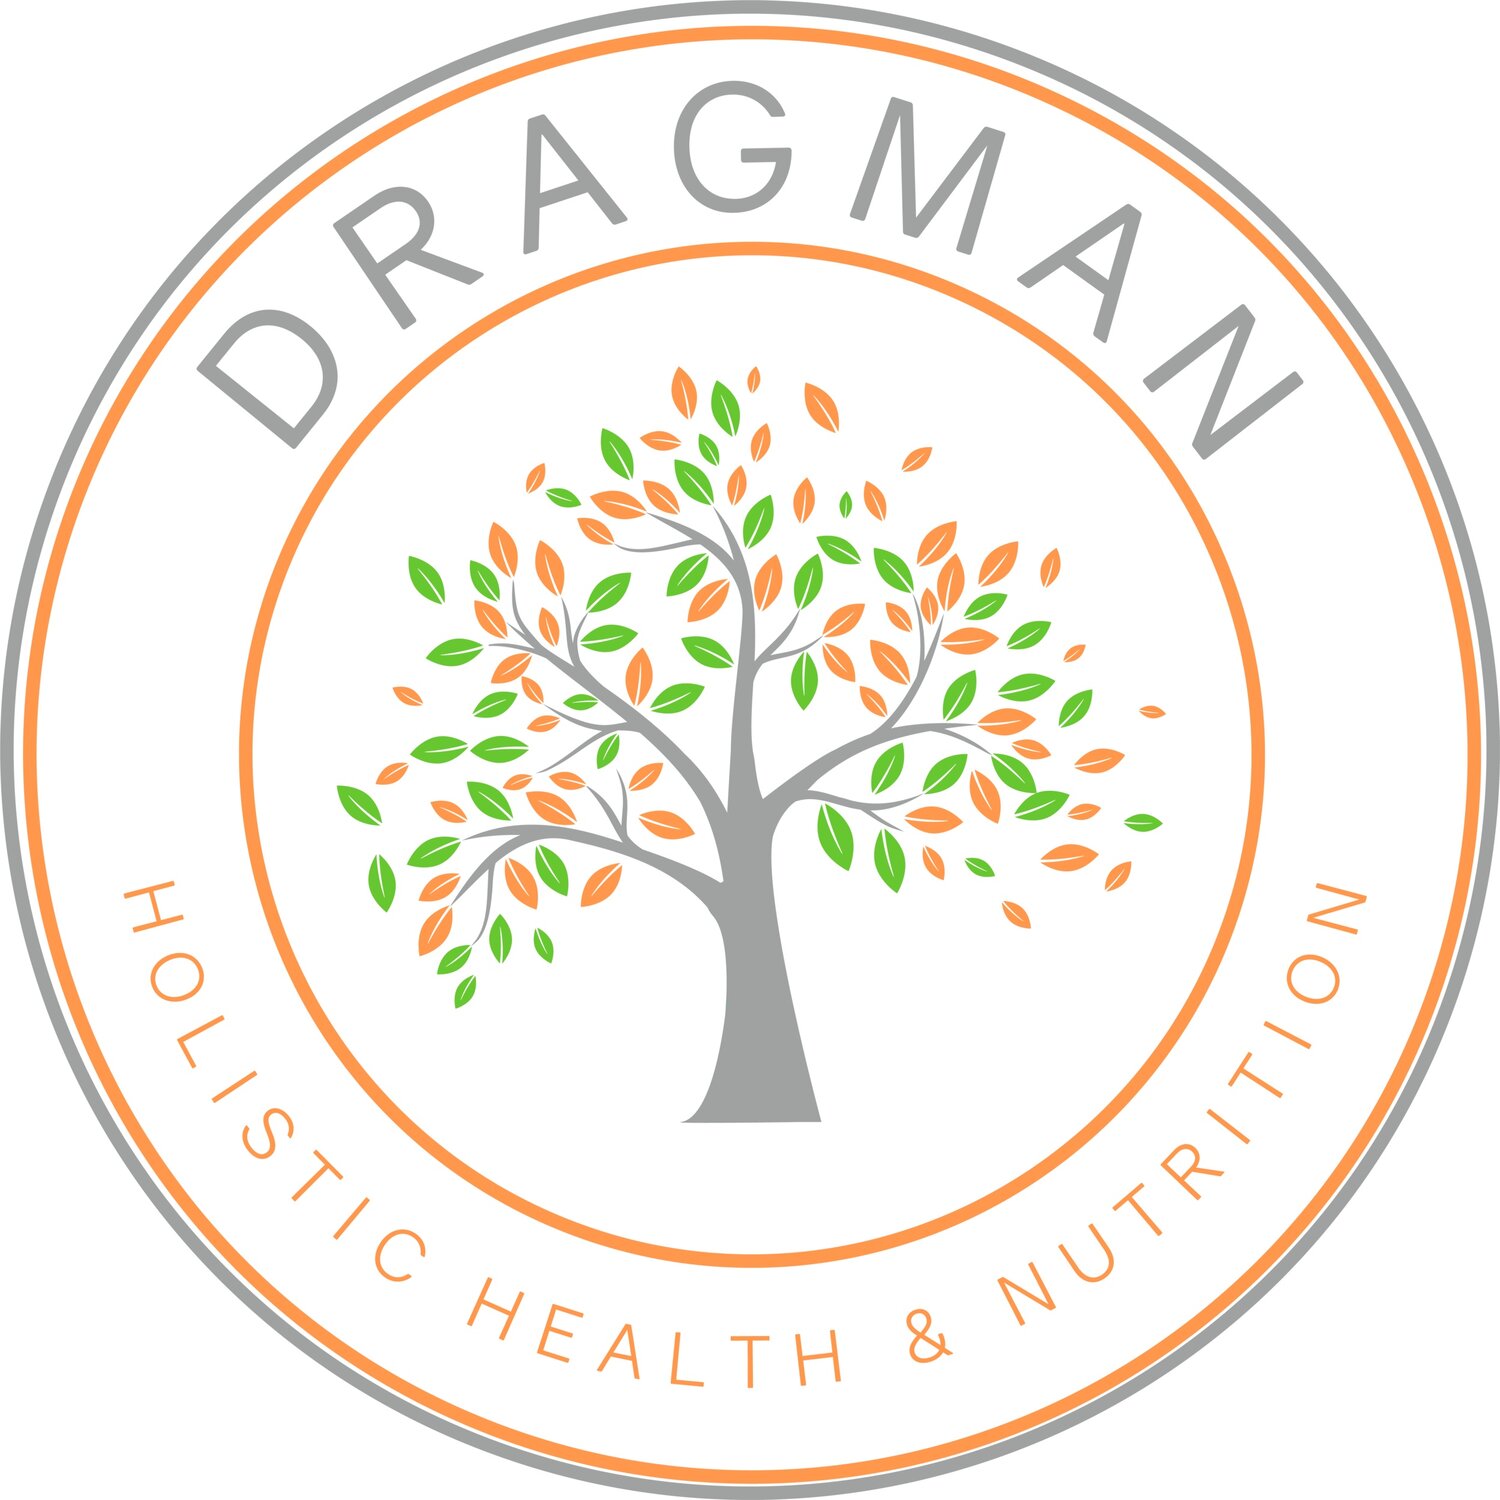 Dragman Holistic Health & Nutrition